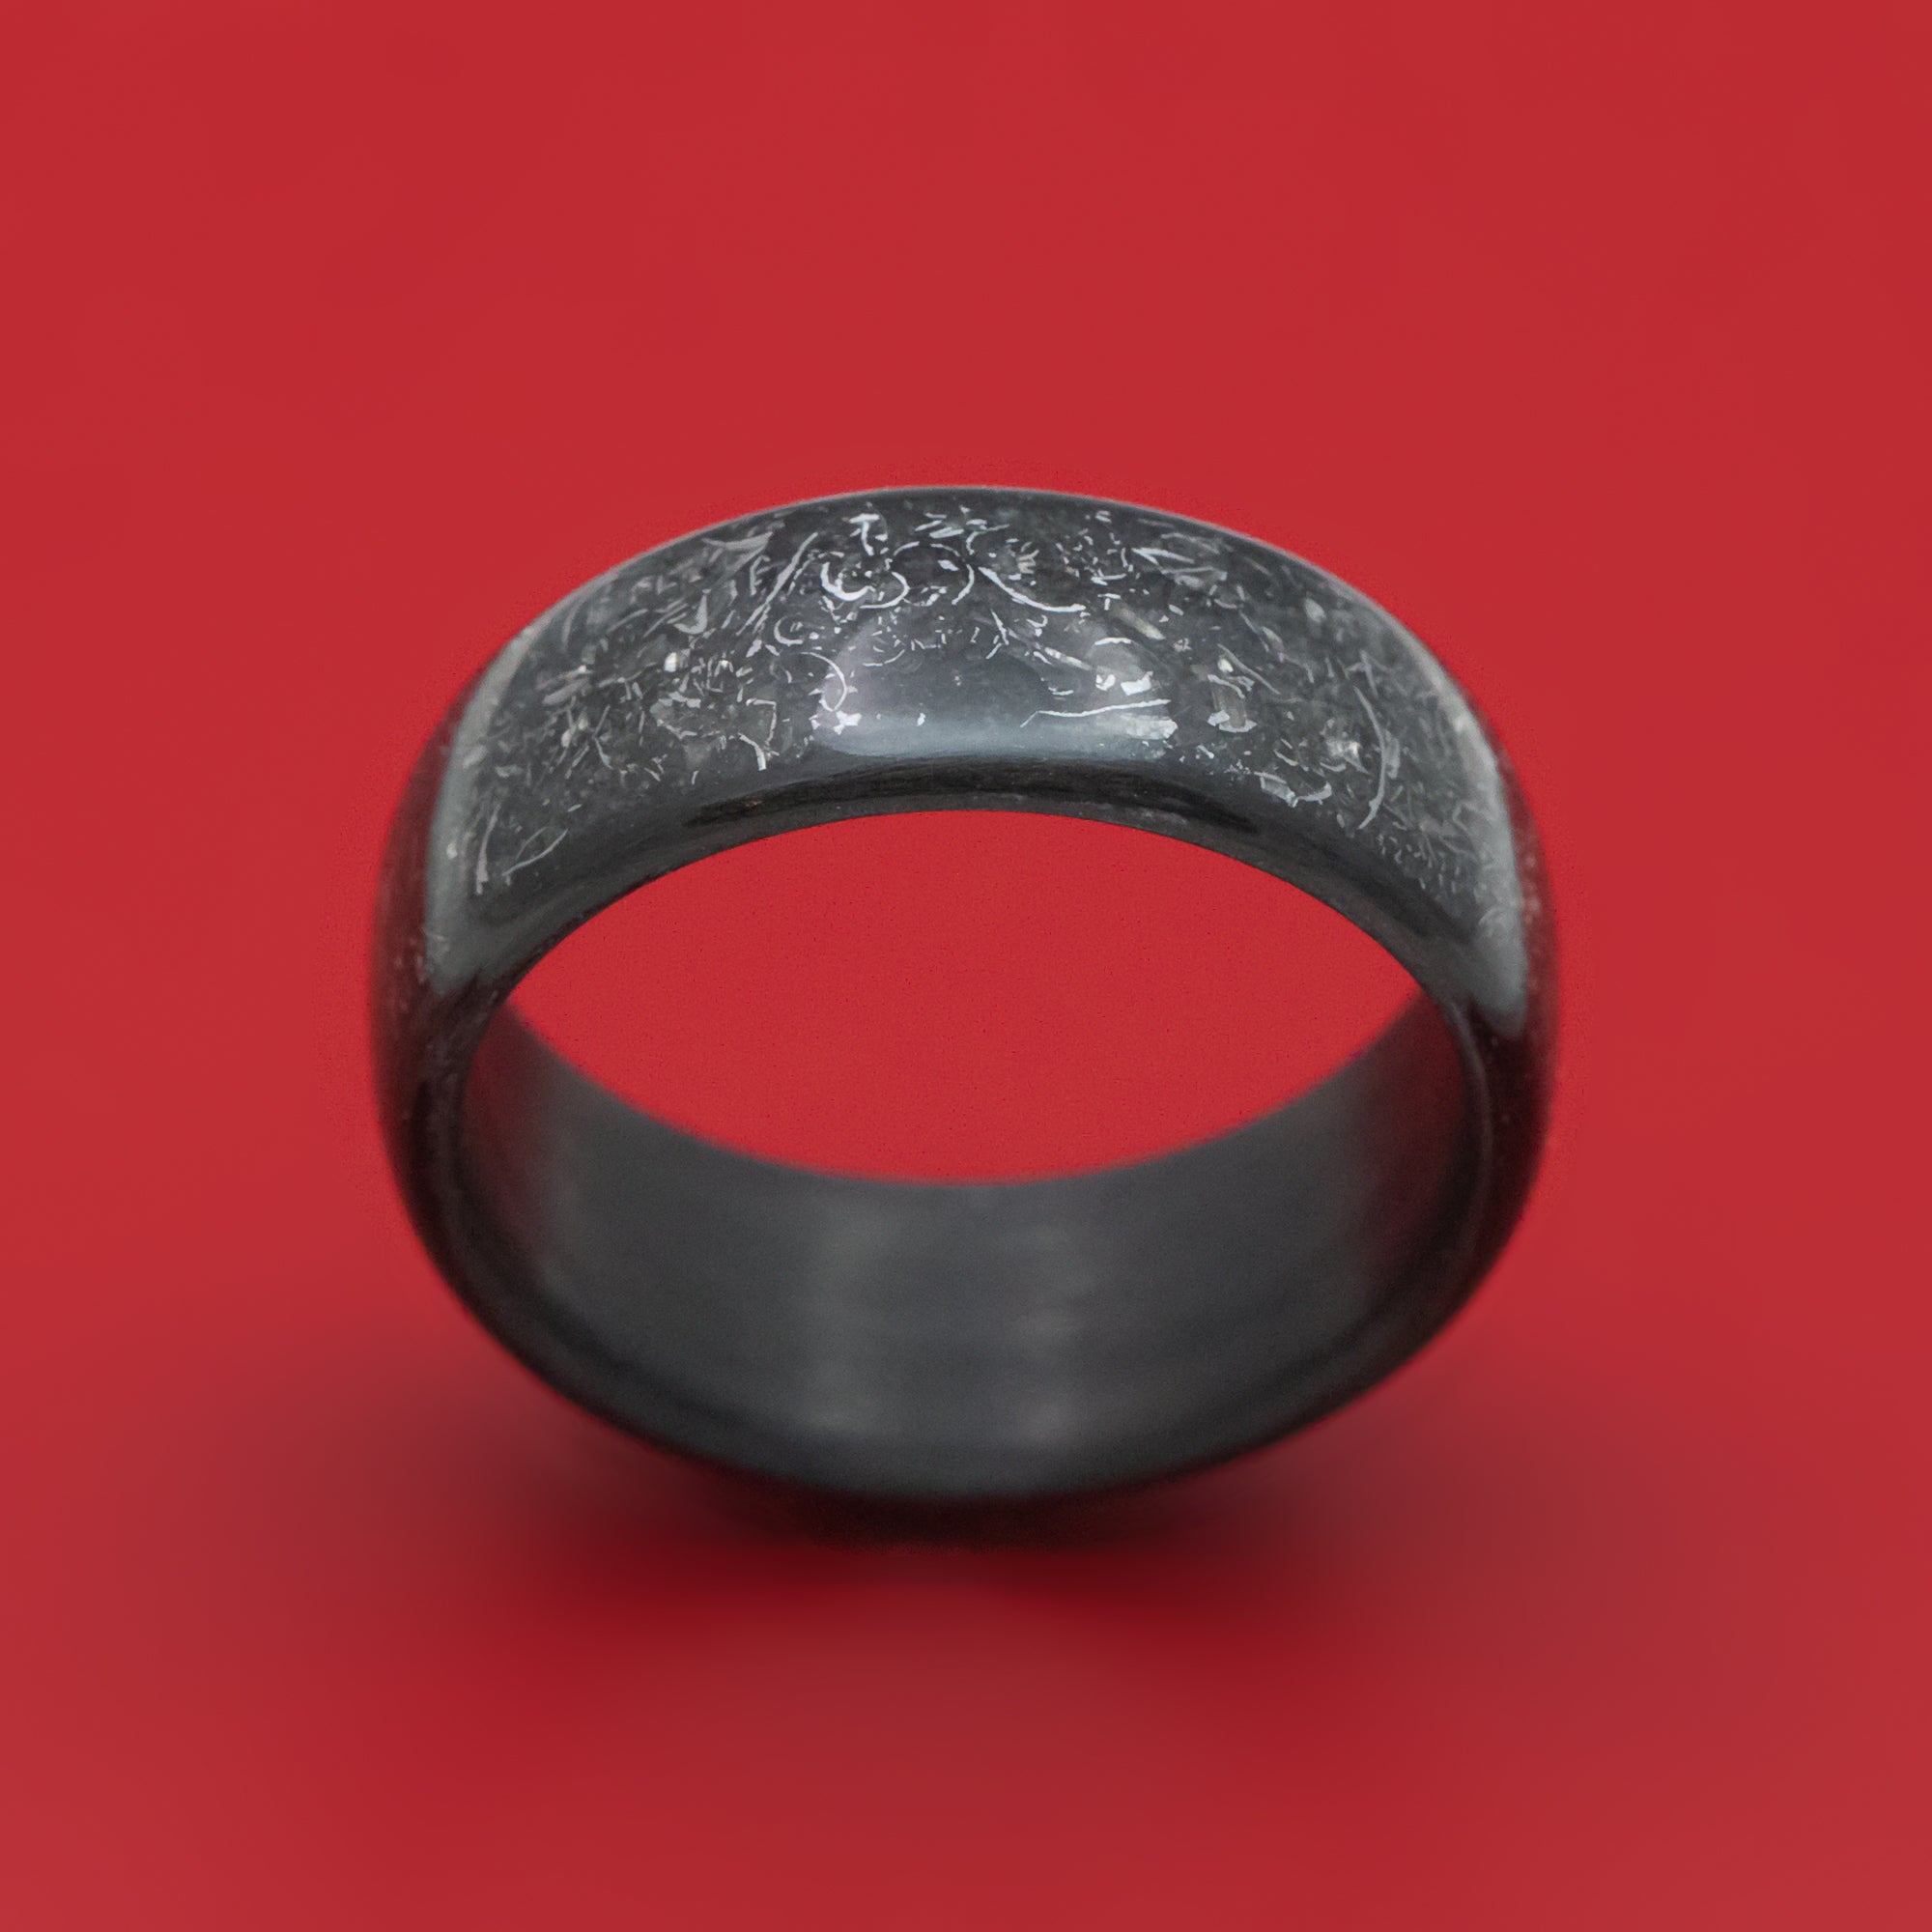 Titanium Glow ring with amethyst inlay. #glow #Glowring #jewelry #glowstone  #weddingring #engagementring #patricka… | Wedding rings, Wedding band sets,  Edgy jewelry